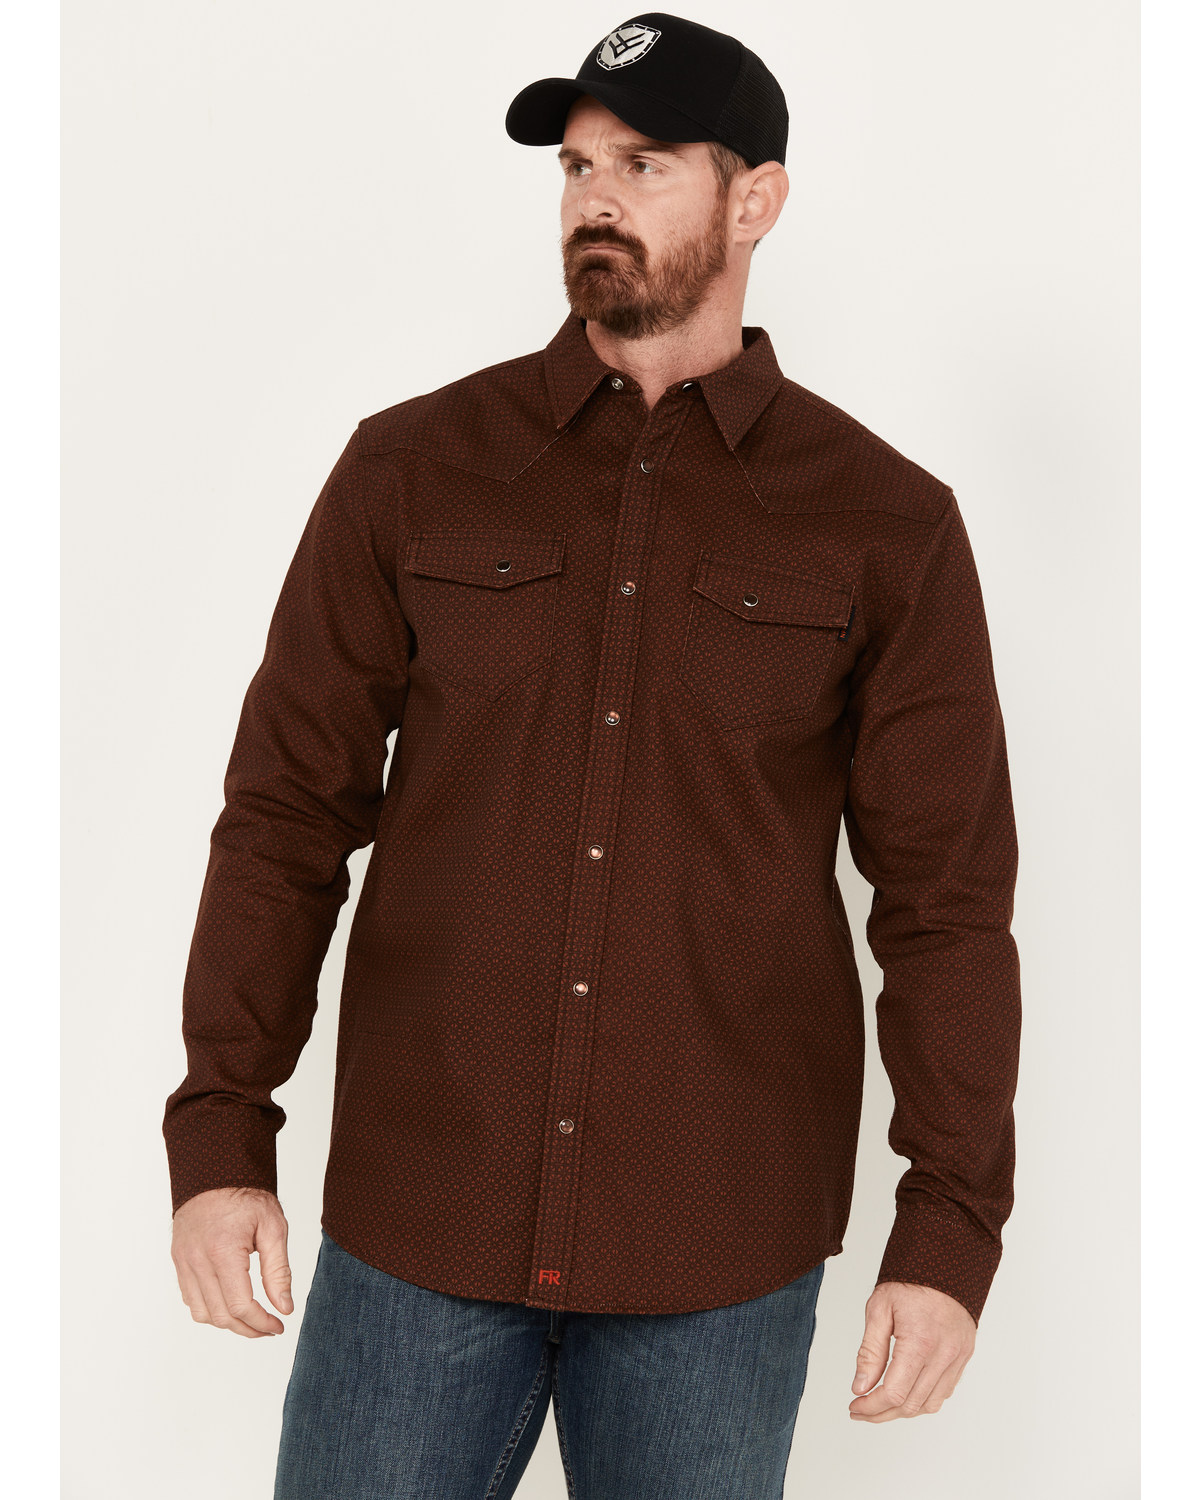 Cody James Men's FR Solid Long Sleeve Snap Western Shirt